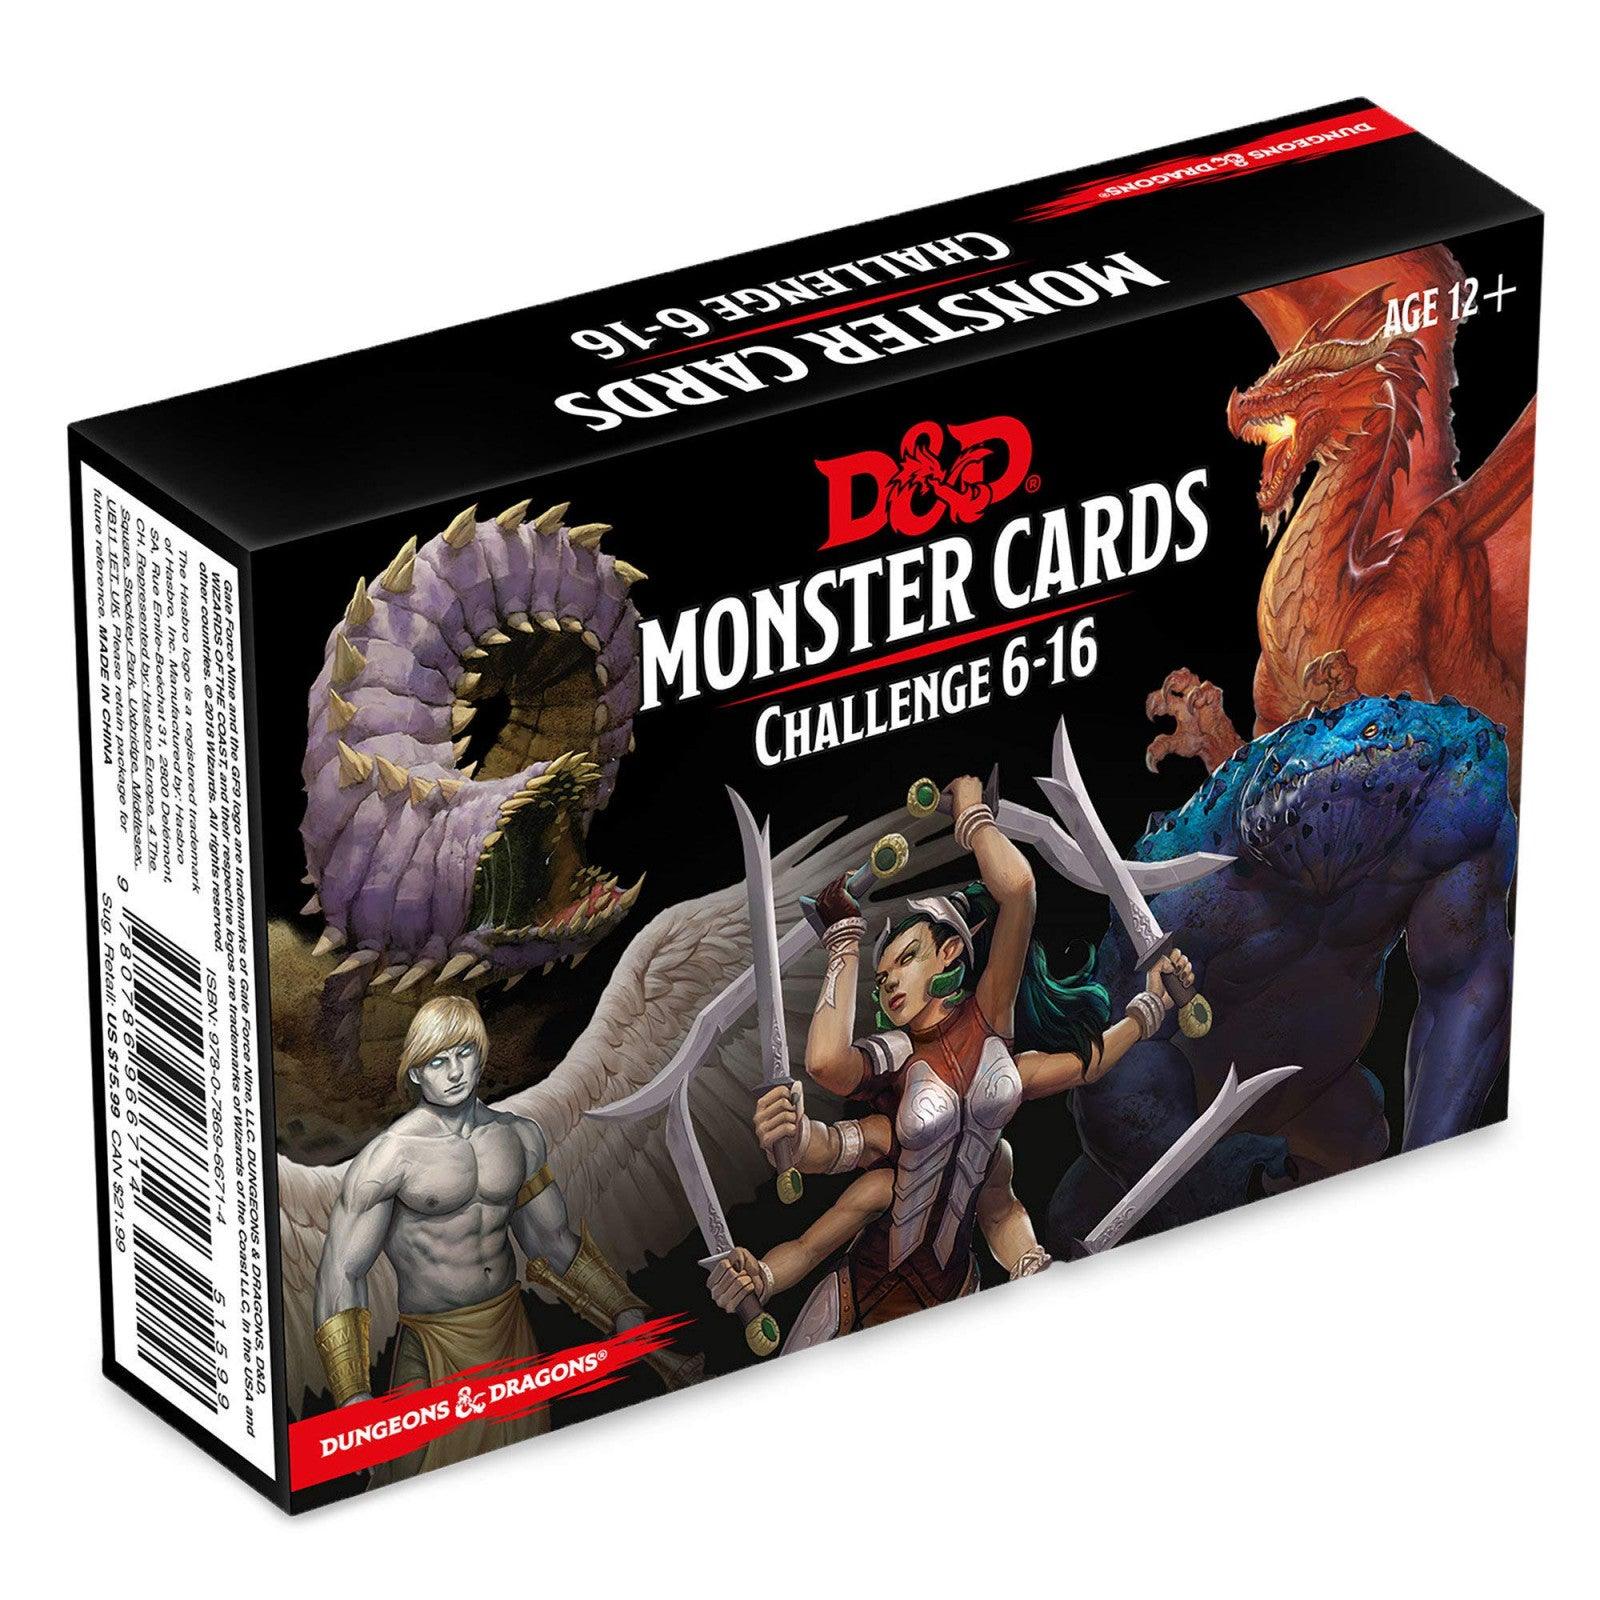 D&D Dungeons & Dragons Spellbook Cards Monster Cards Challenge 6-16